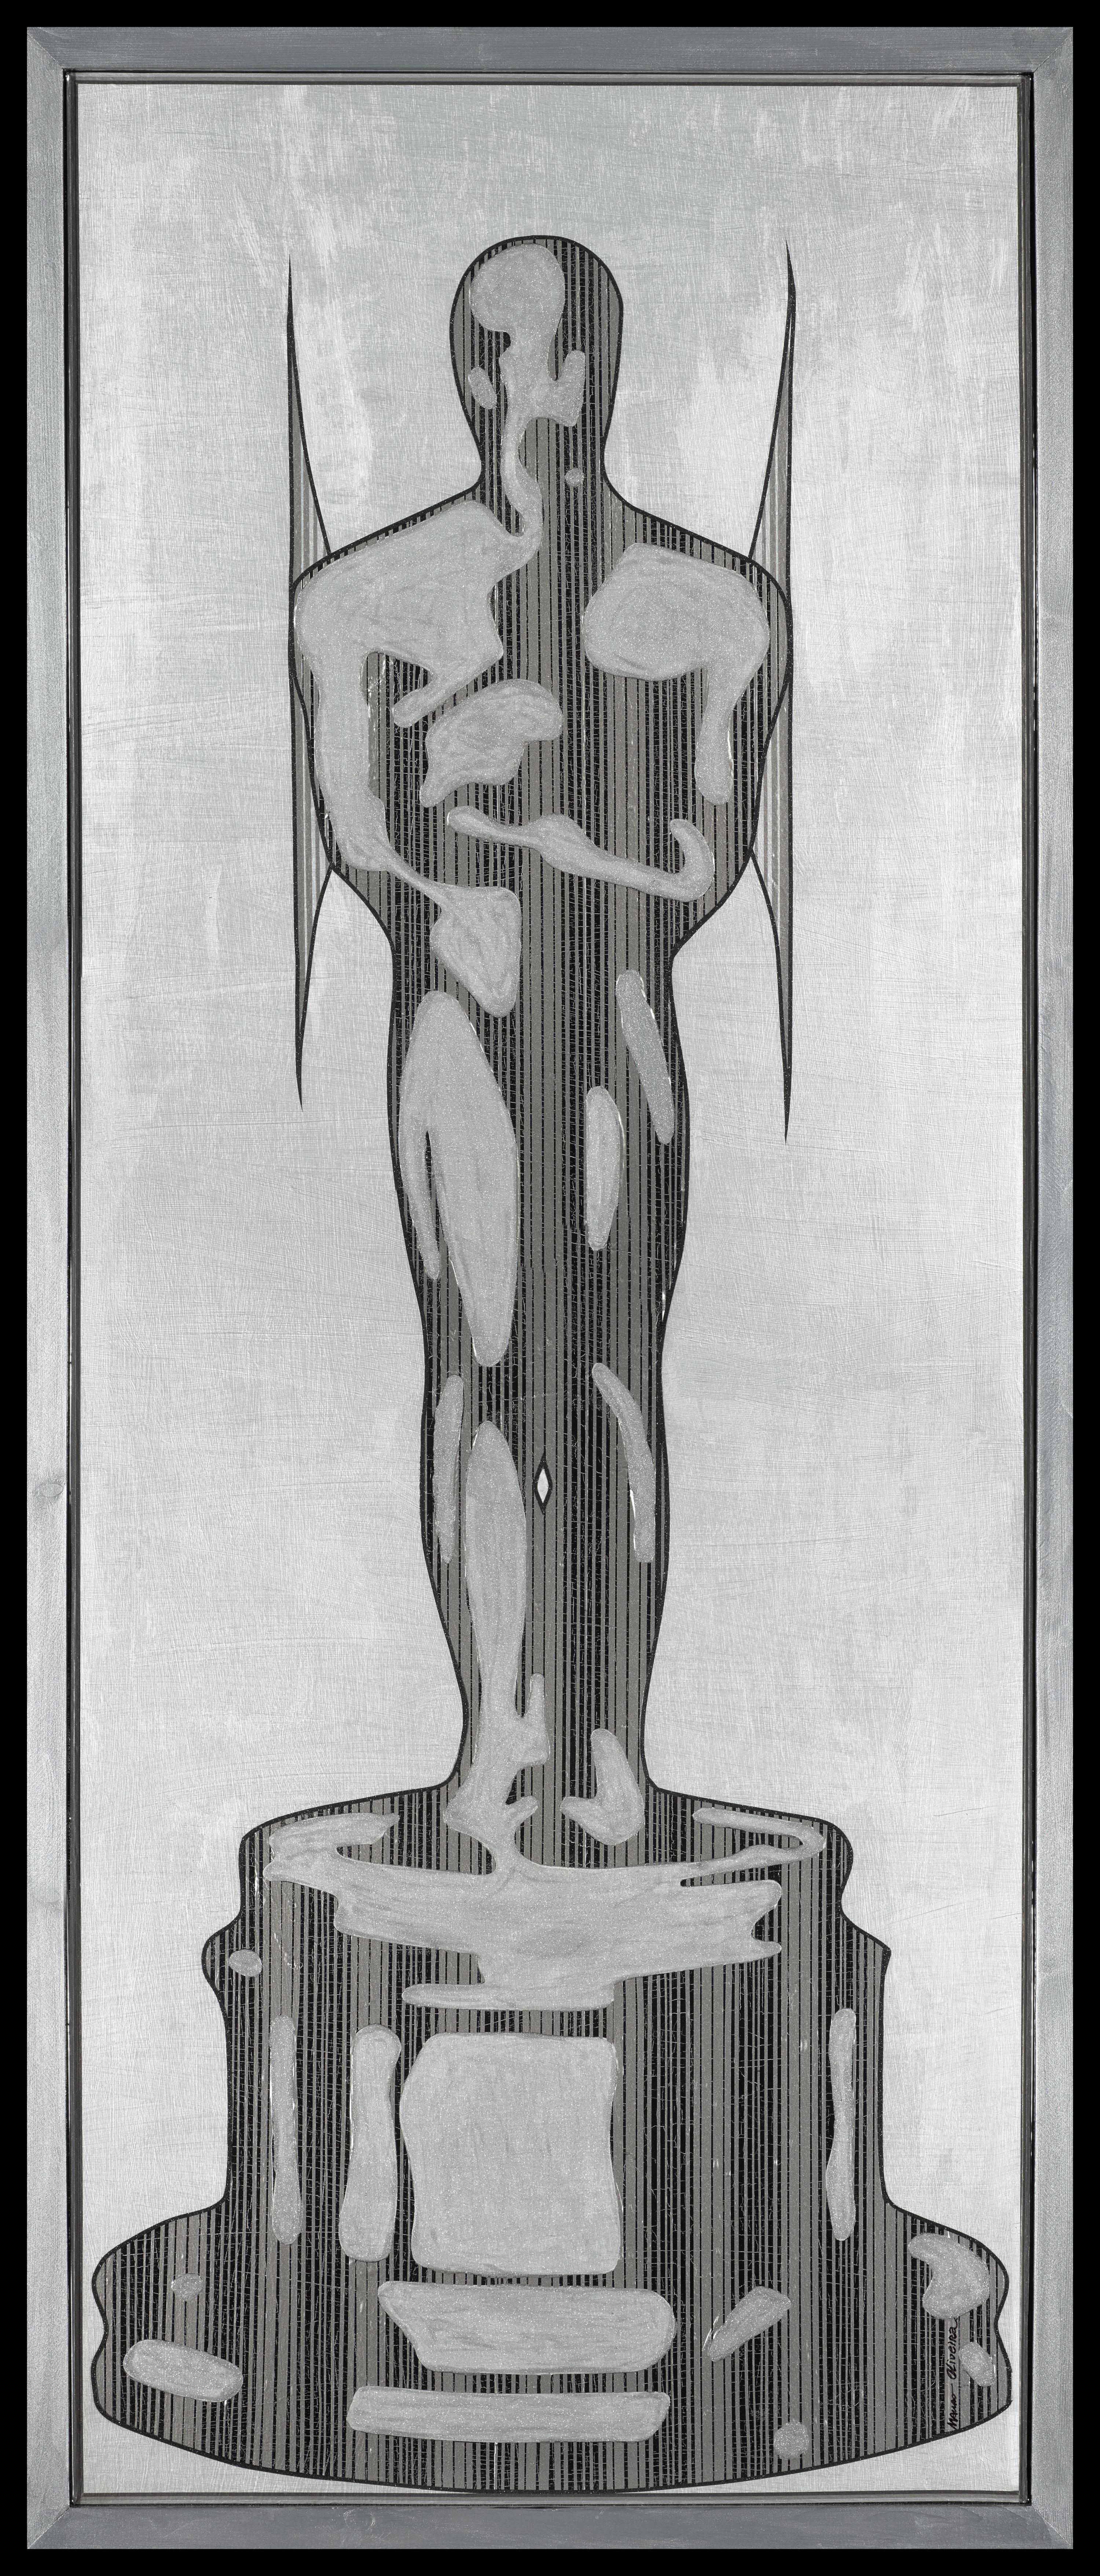 Mauro Oliveira Figurative Print - Super Silver Oscar (Limited Edition Print)